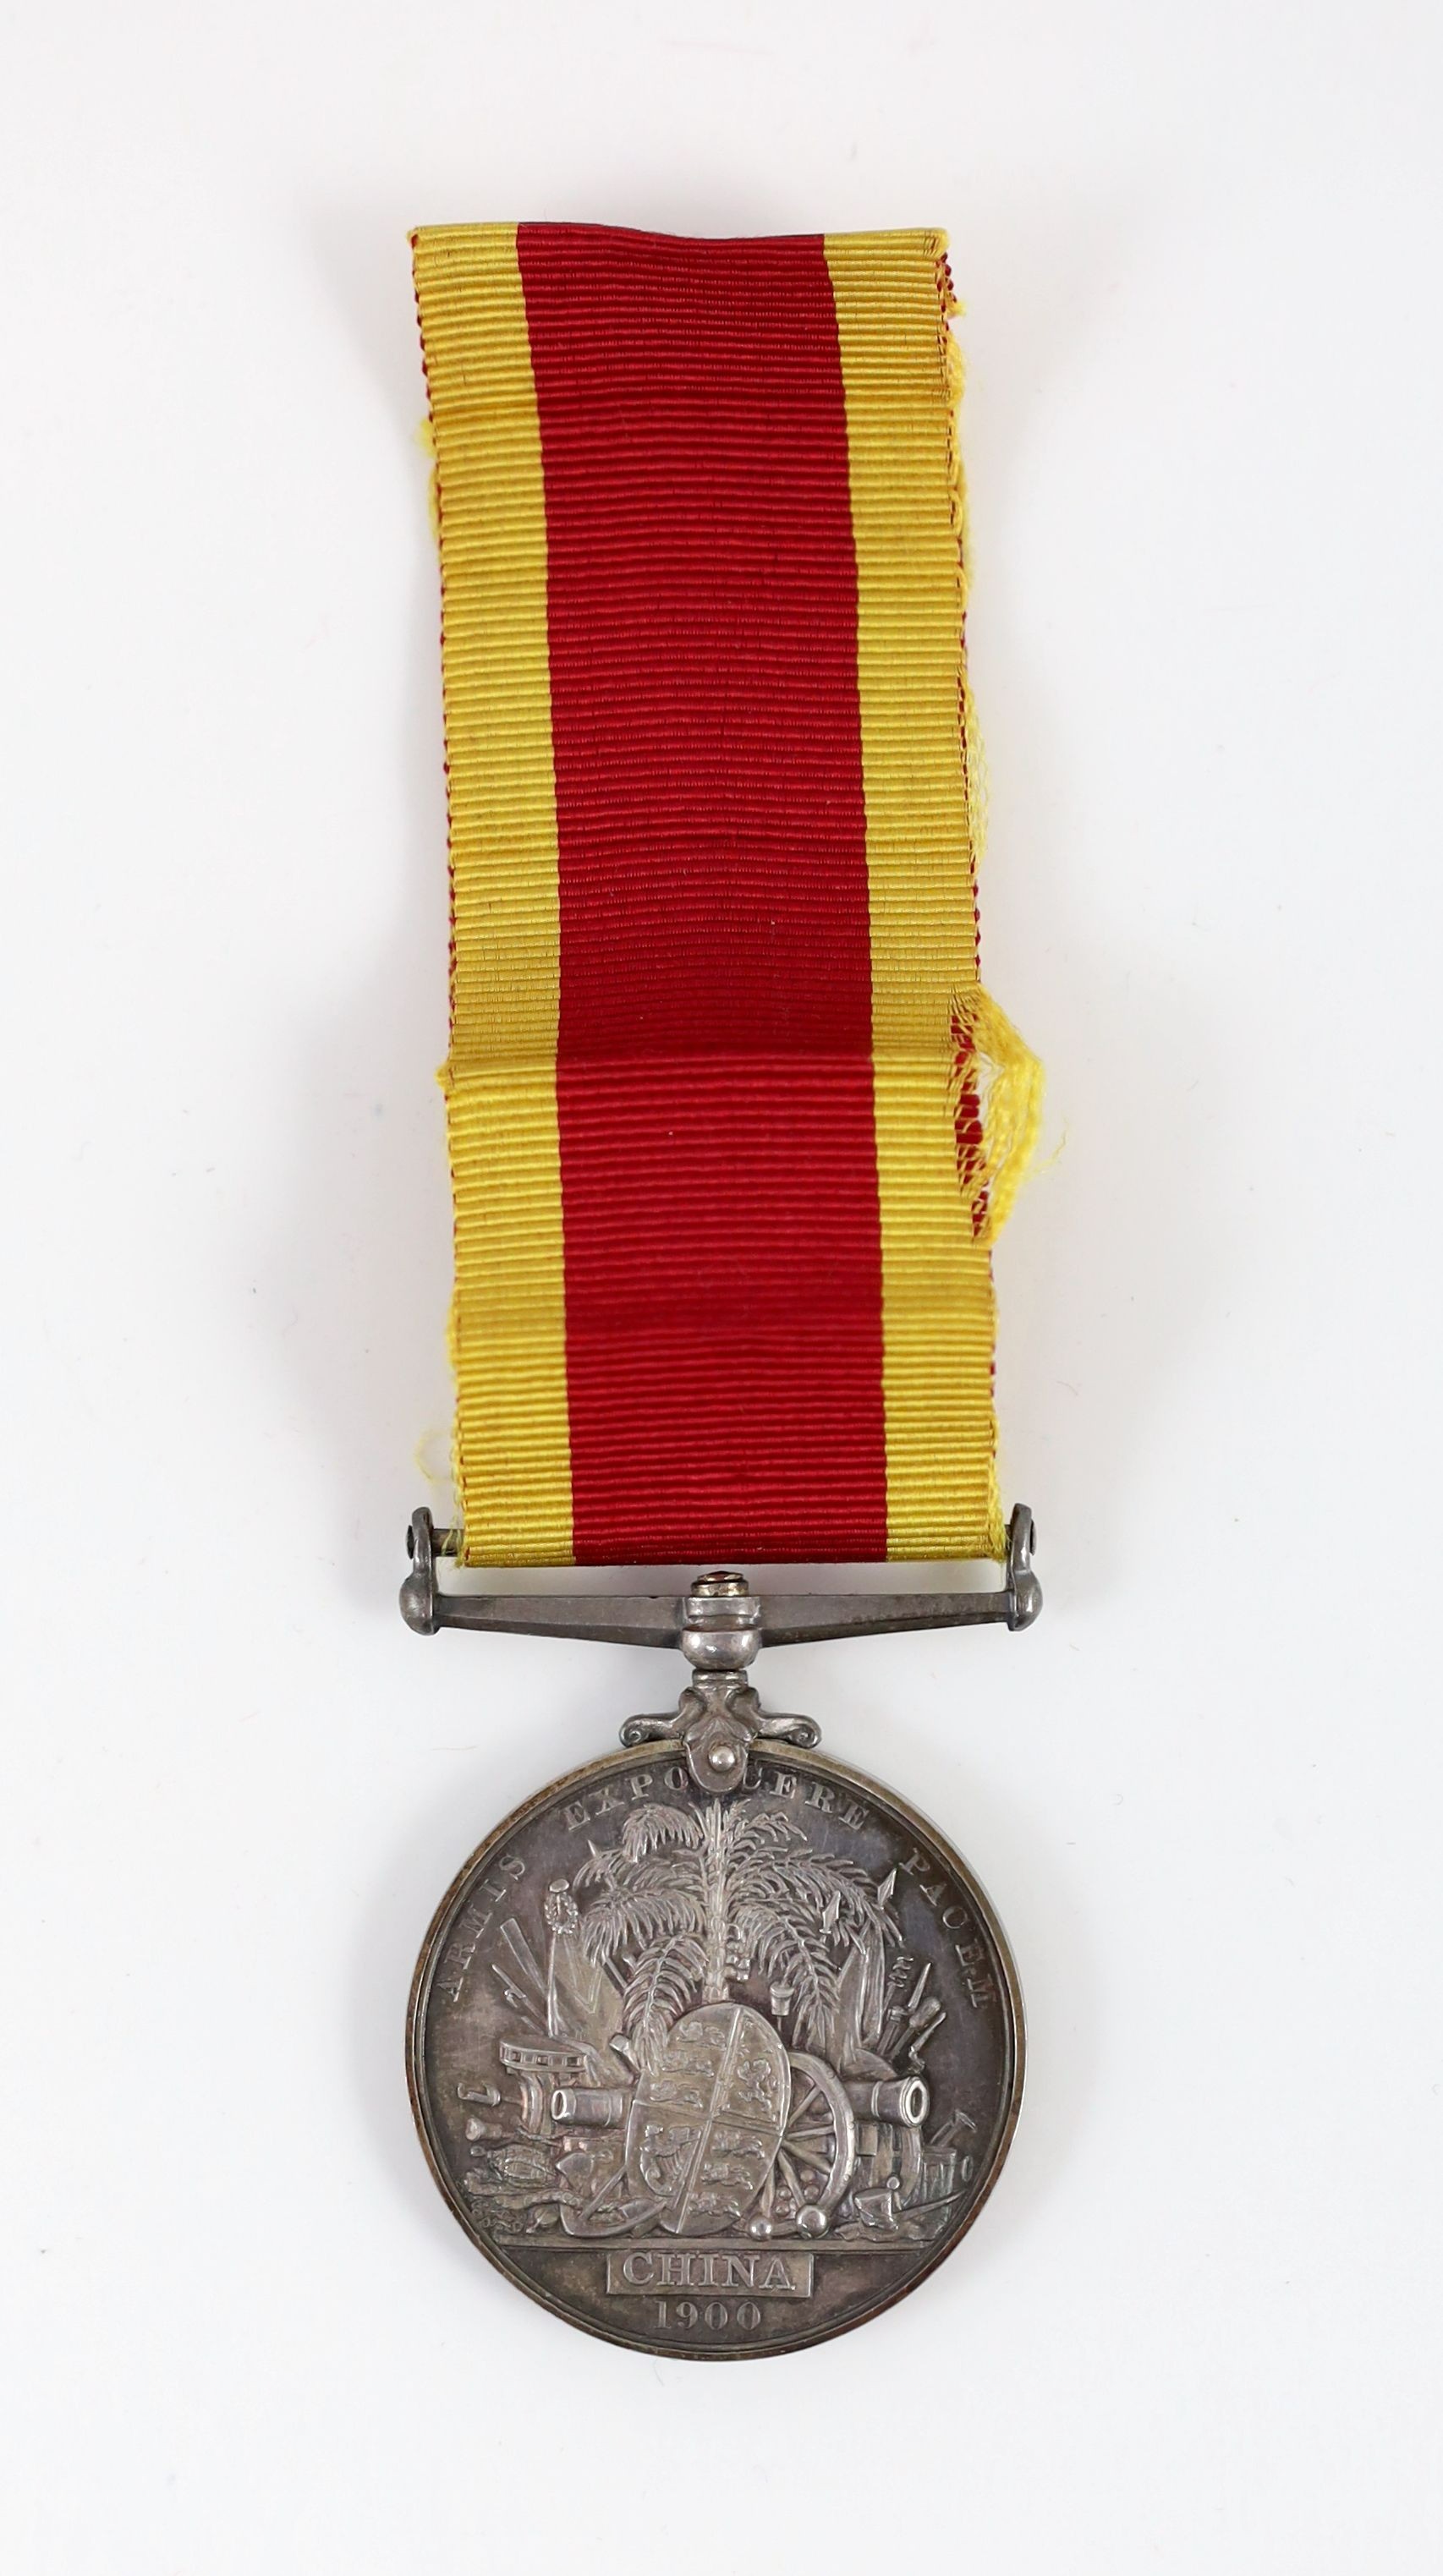 A China 1900 medal to L. -CORPL. F.W. FOWLER. SHANGHAI VOLS